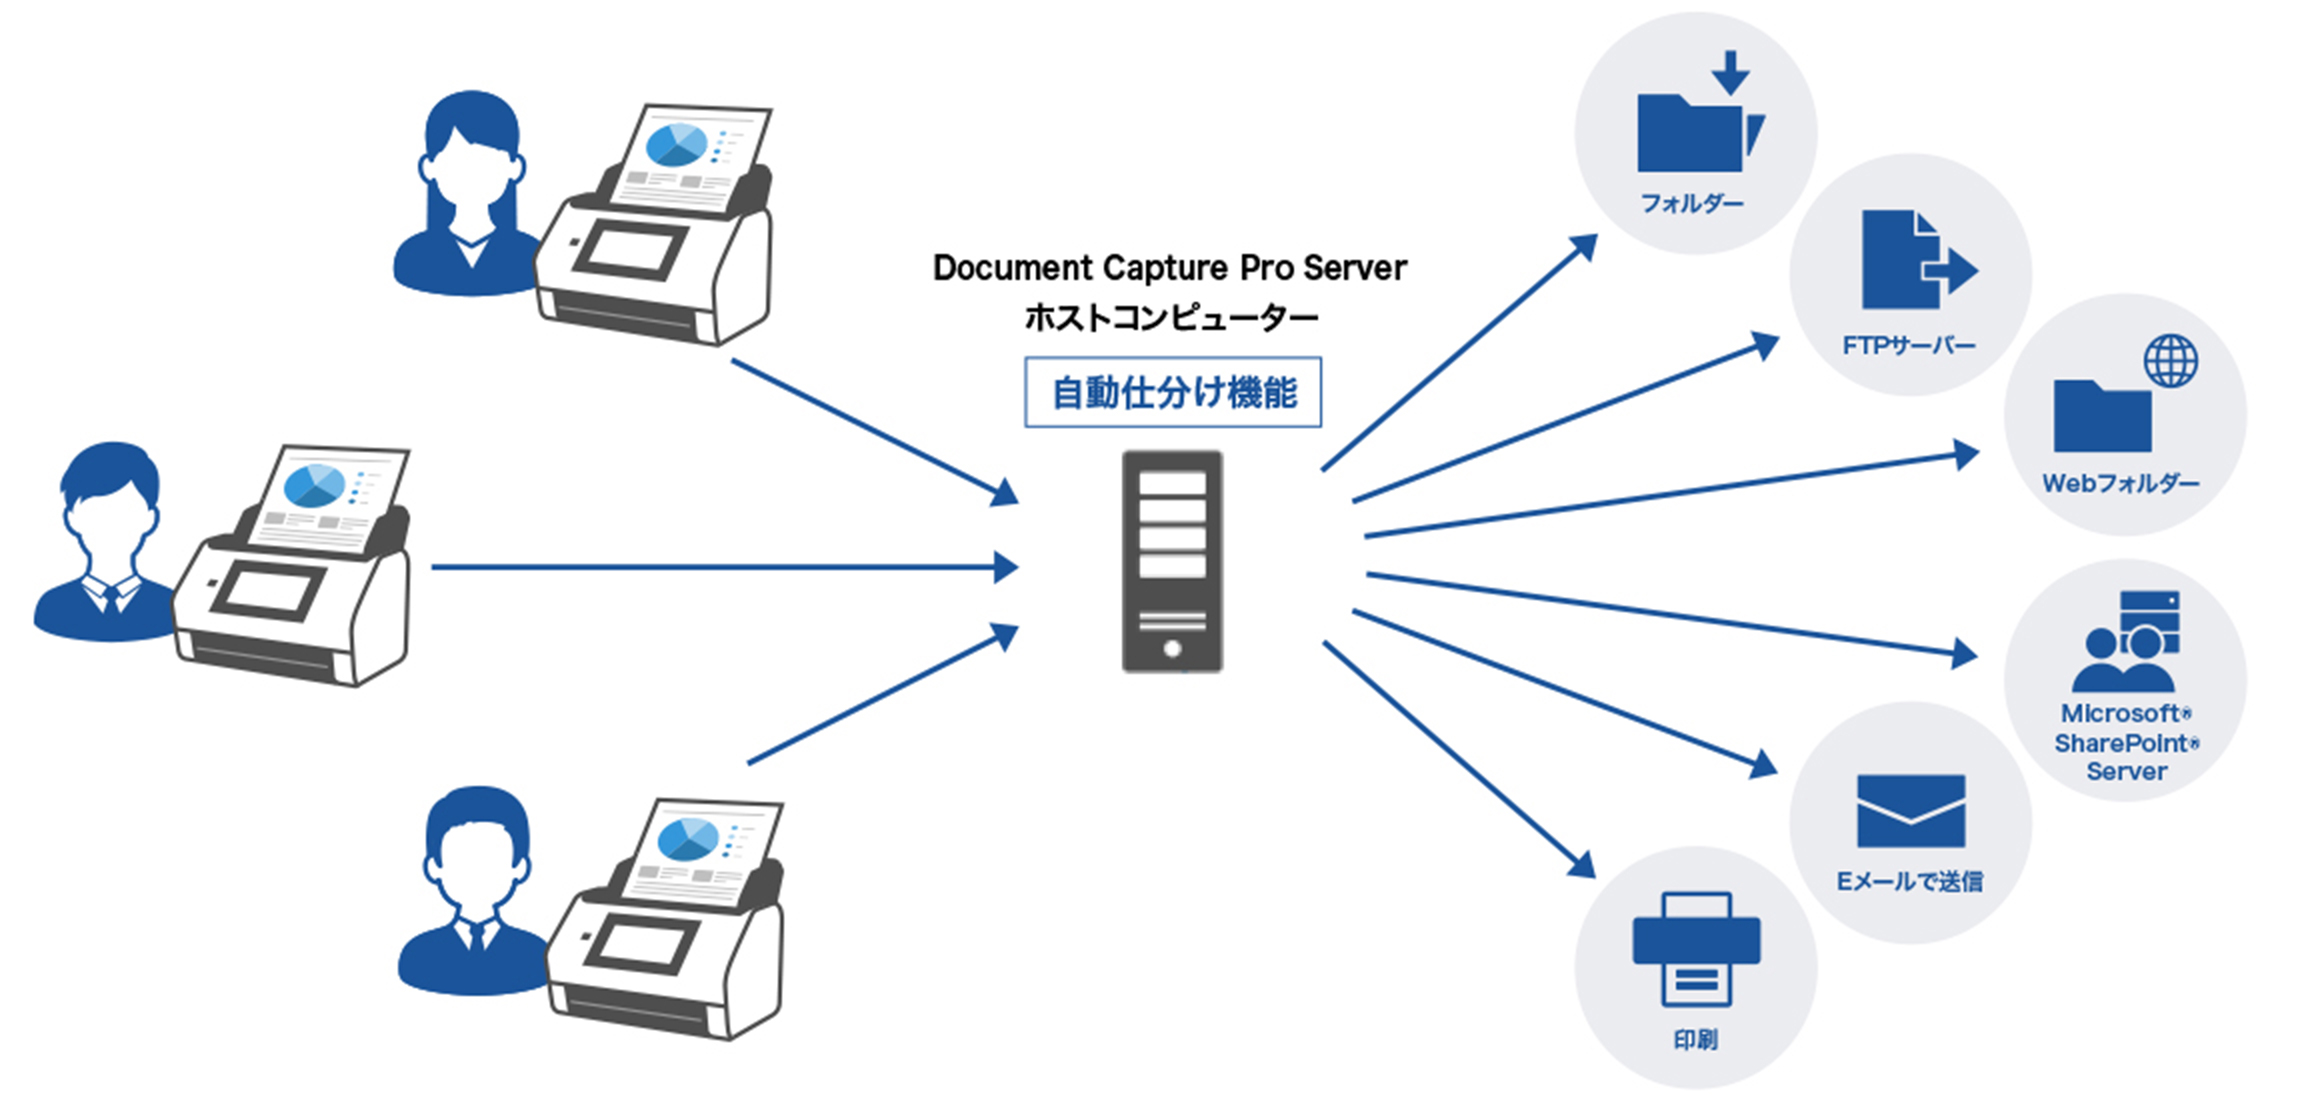 Document Capture Pro Server